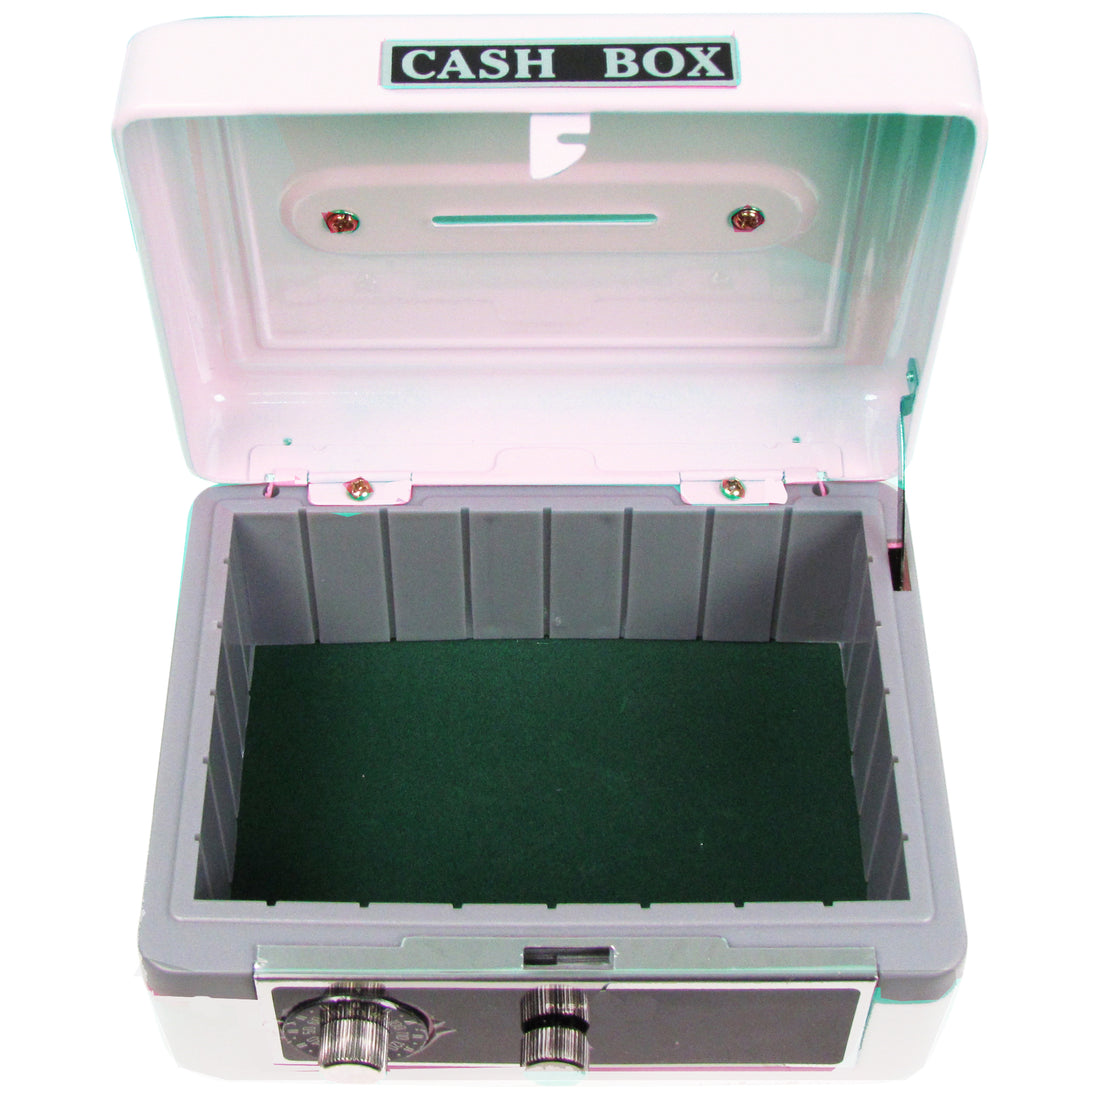 Personalized White Cash Box with Golf design